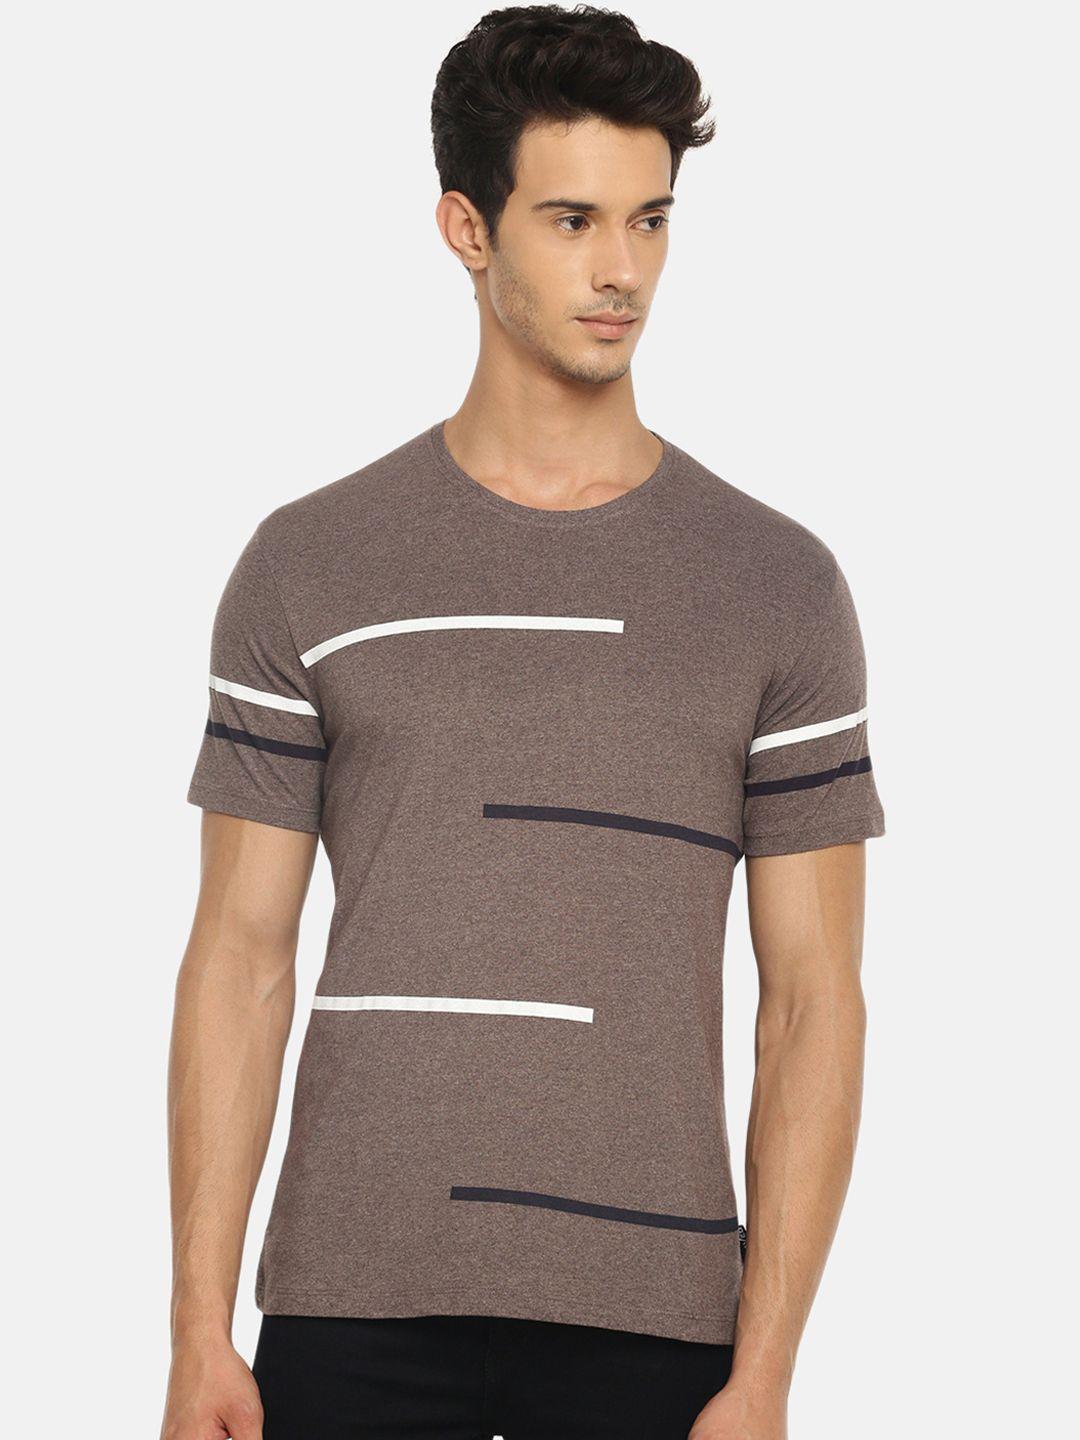 braveo men taupe striped round neck pure cotton t-shirt